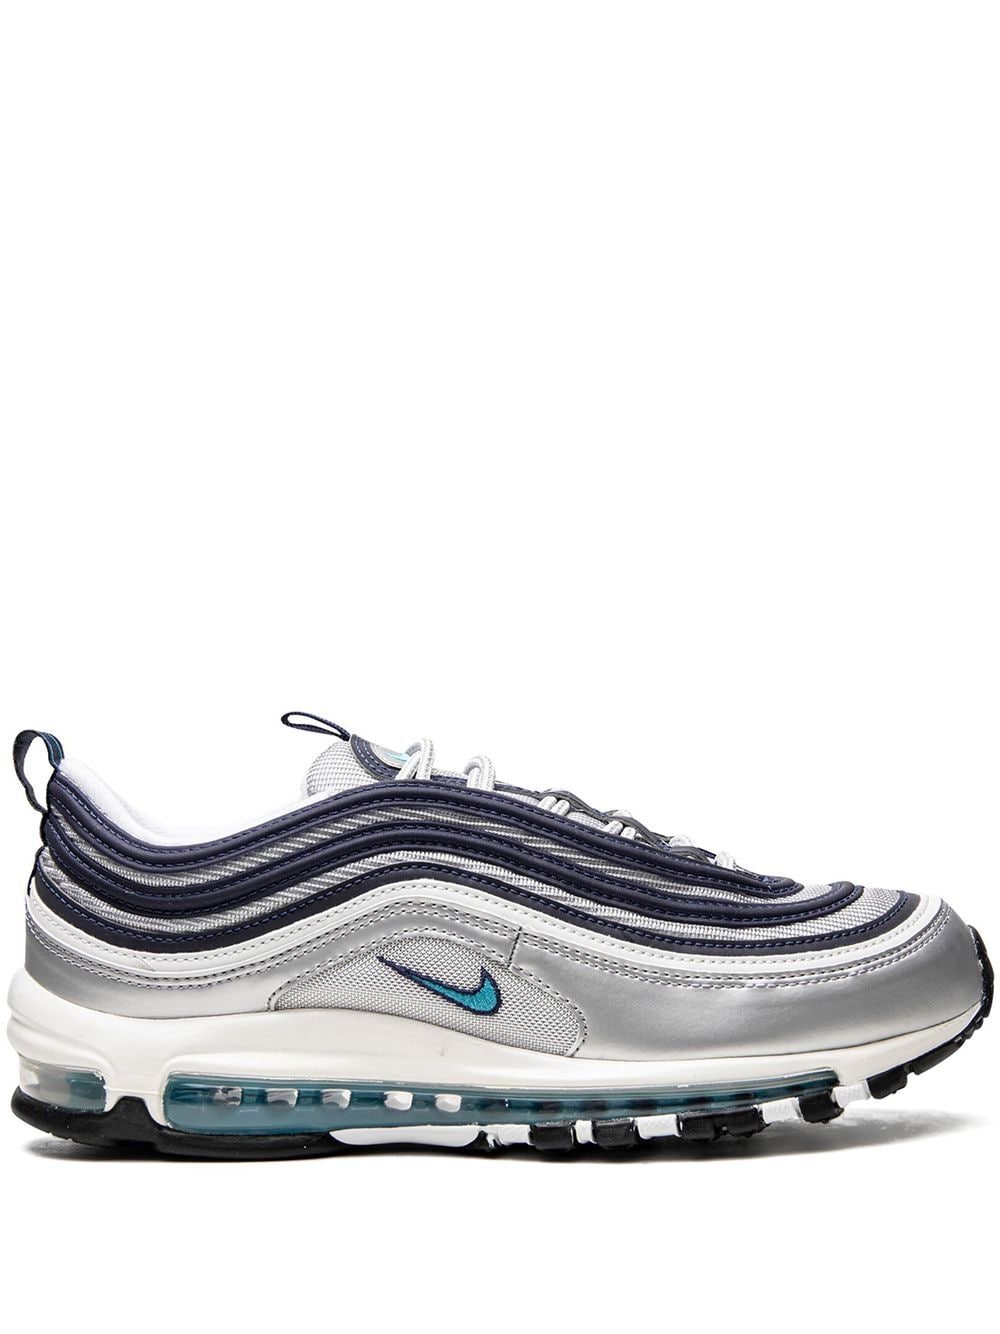 Image 1 of Nike Air Max 97 "Metallic Silver/Chlorine Blue" sneakers